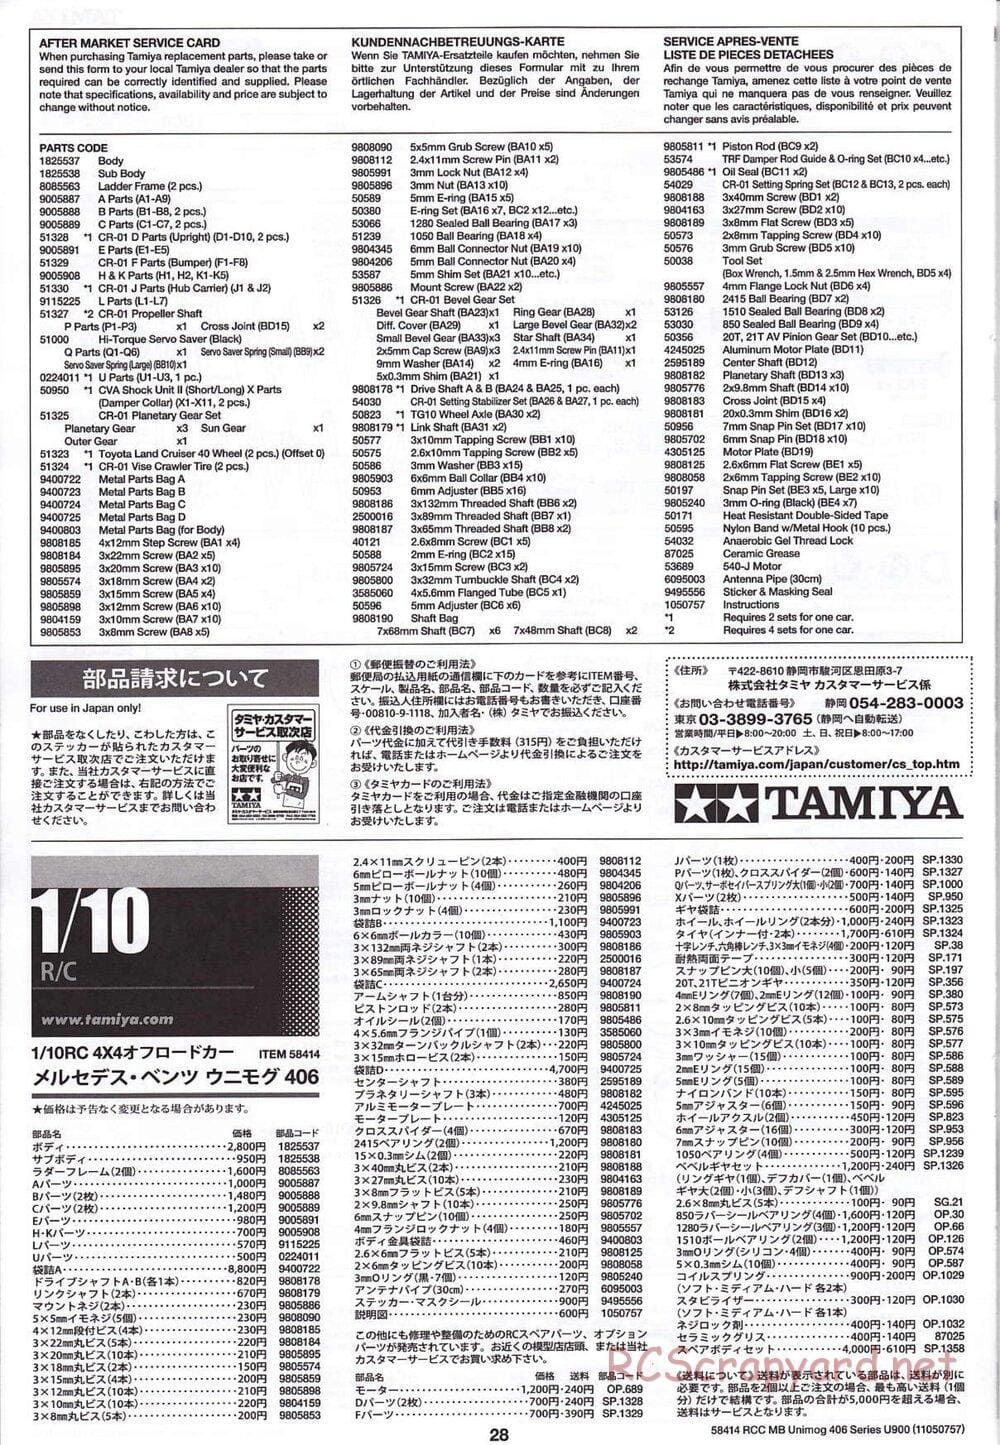 Tamiya - Mercedes-Benz Unimog 406 Series U900 - CR-01 Chassis - Manual - Page 28